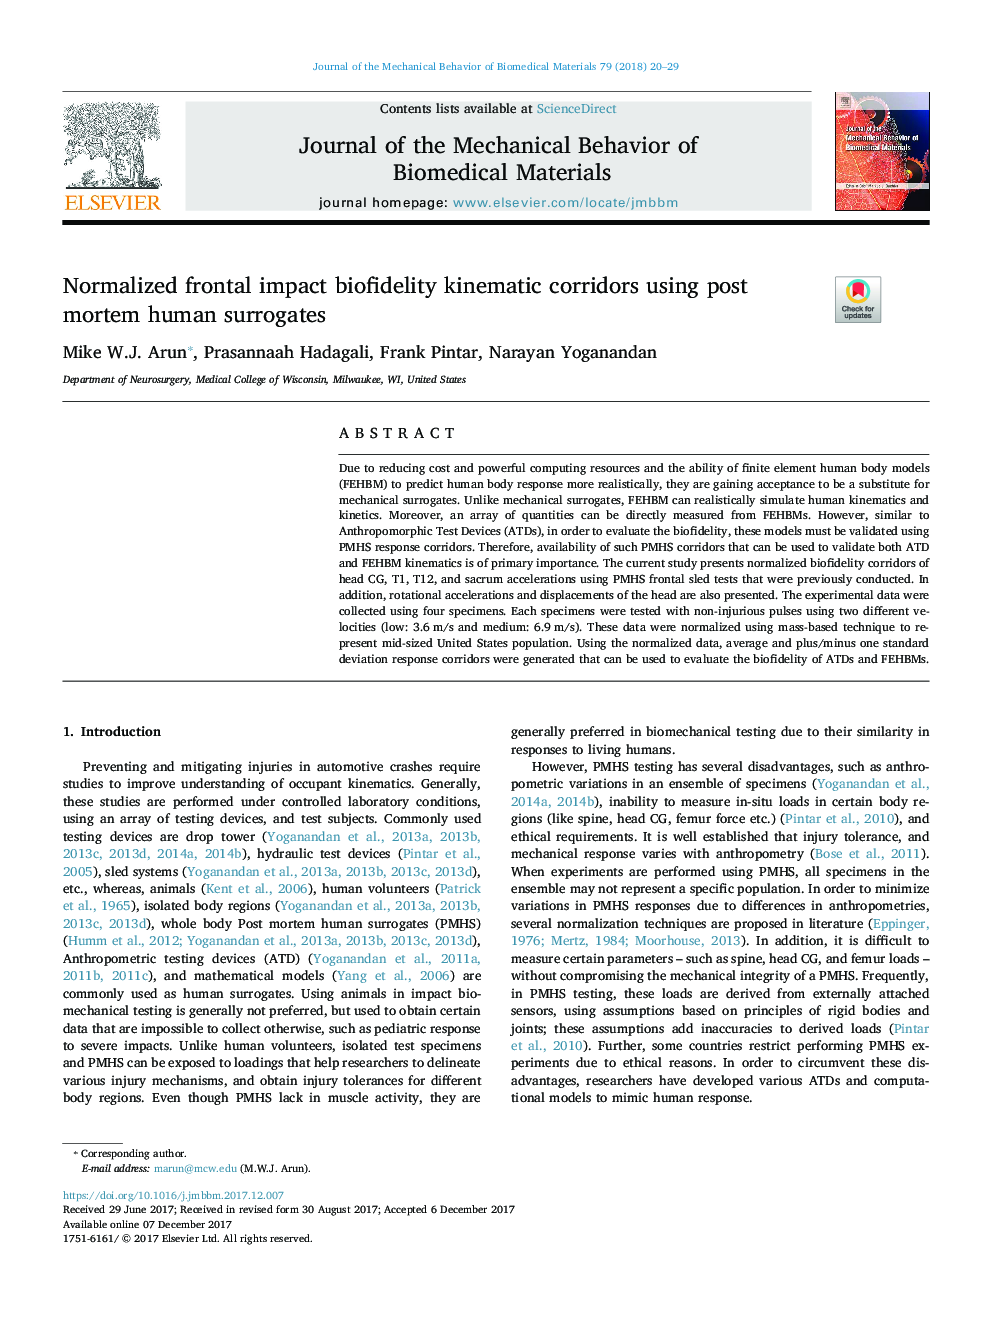 Normalized frontal impact biofidelity kinematic corridors using post mortem human surrogates